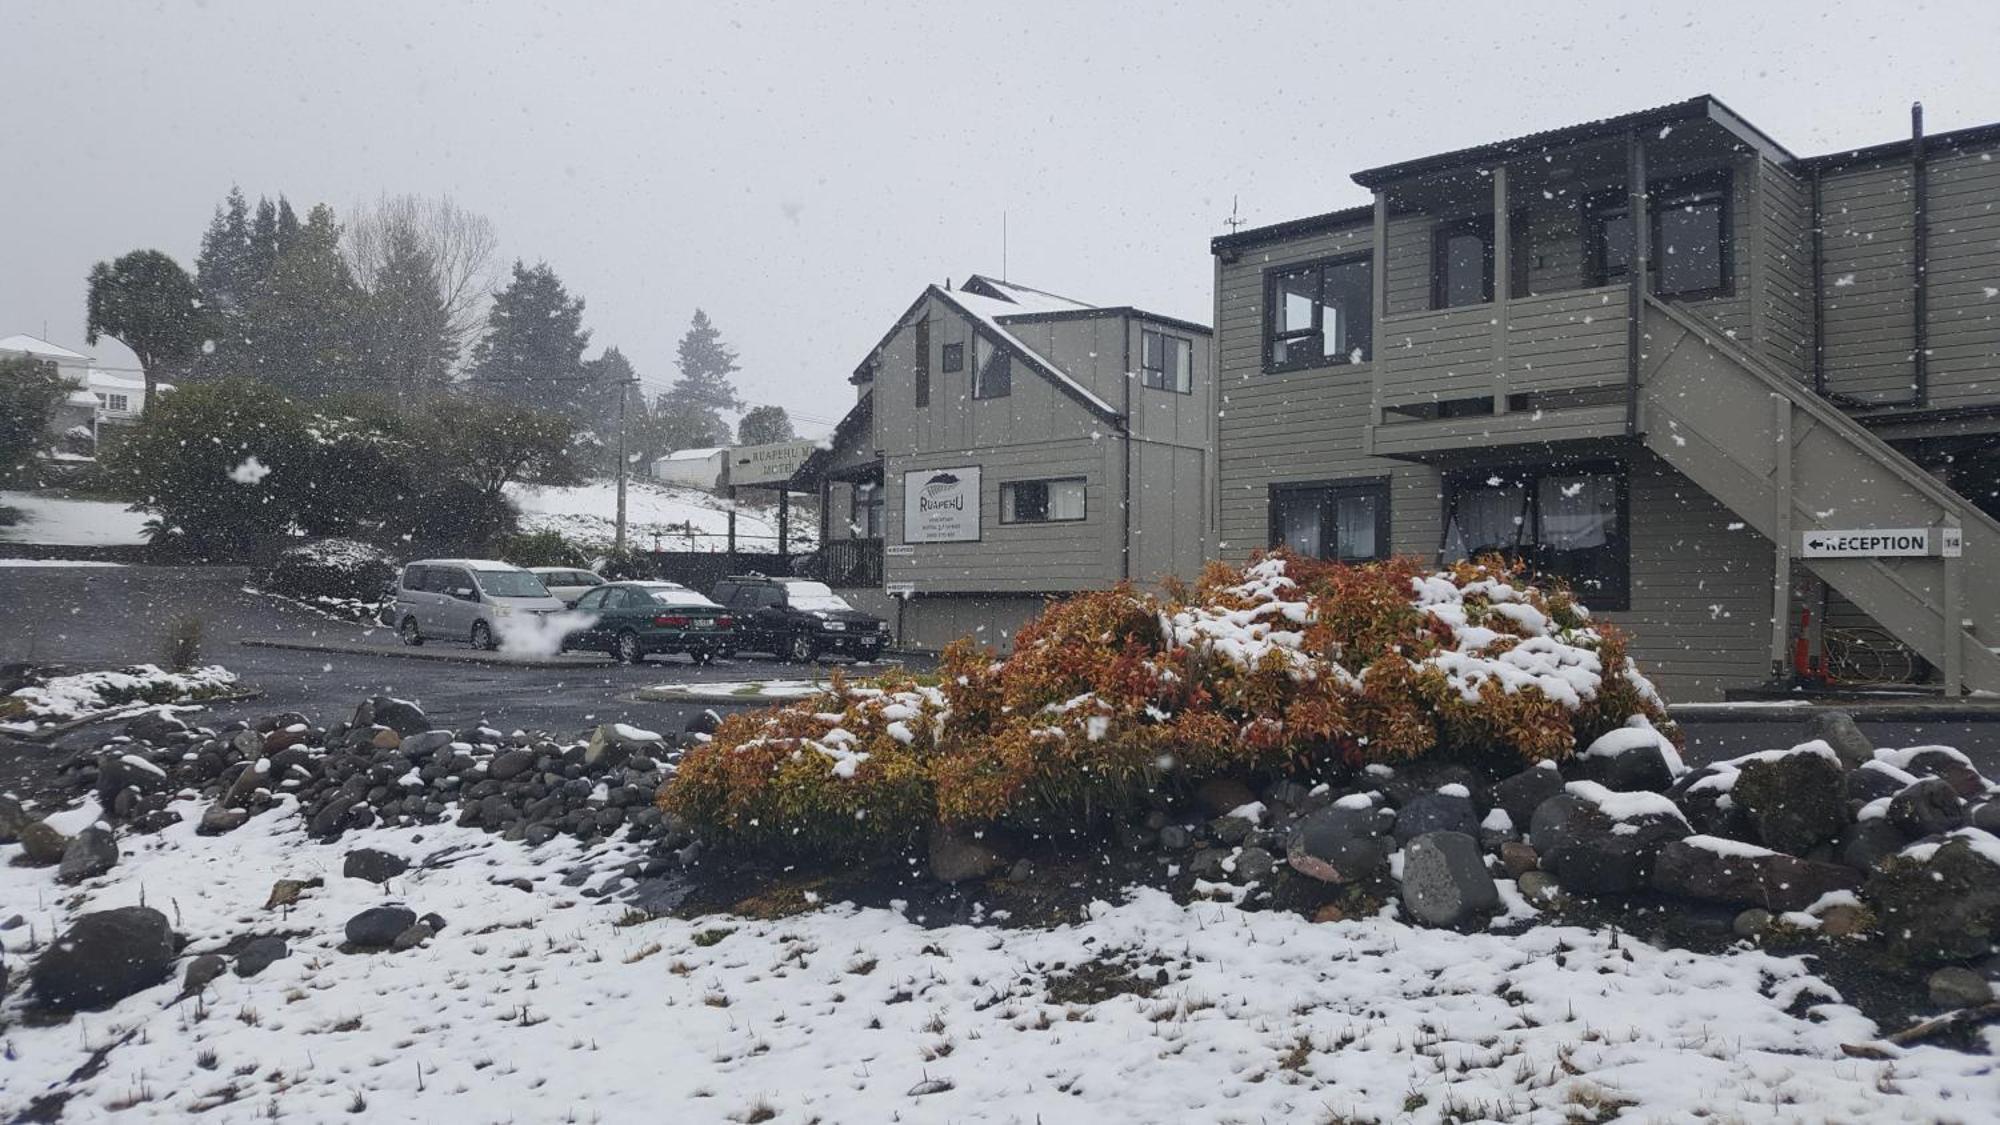 Ruapehu Mountain Motel & Lodge Ohakune Luaran gambar